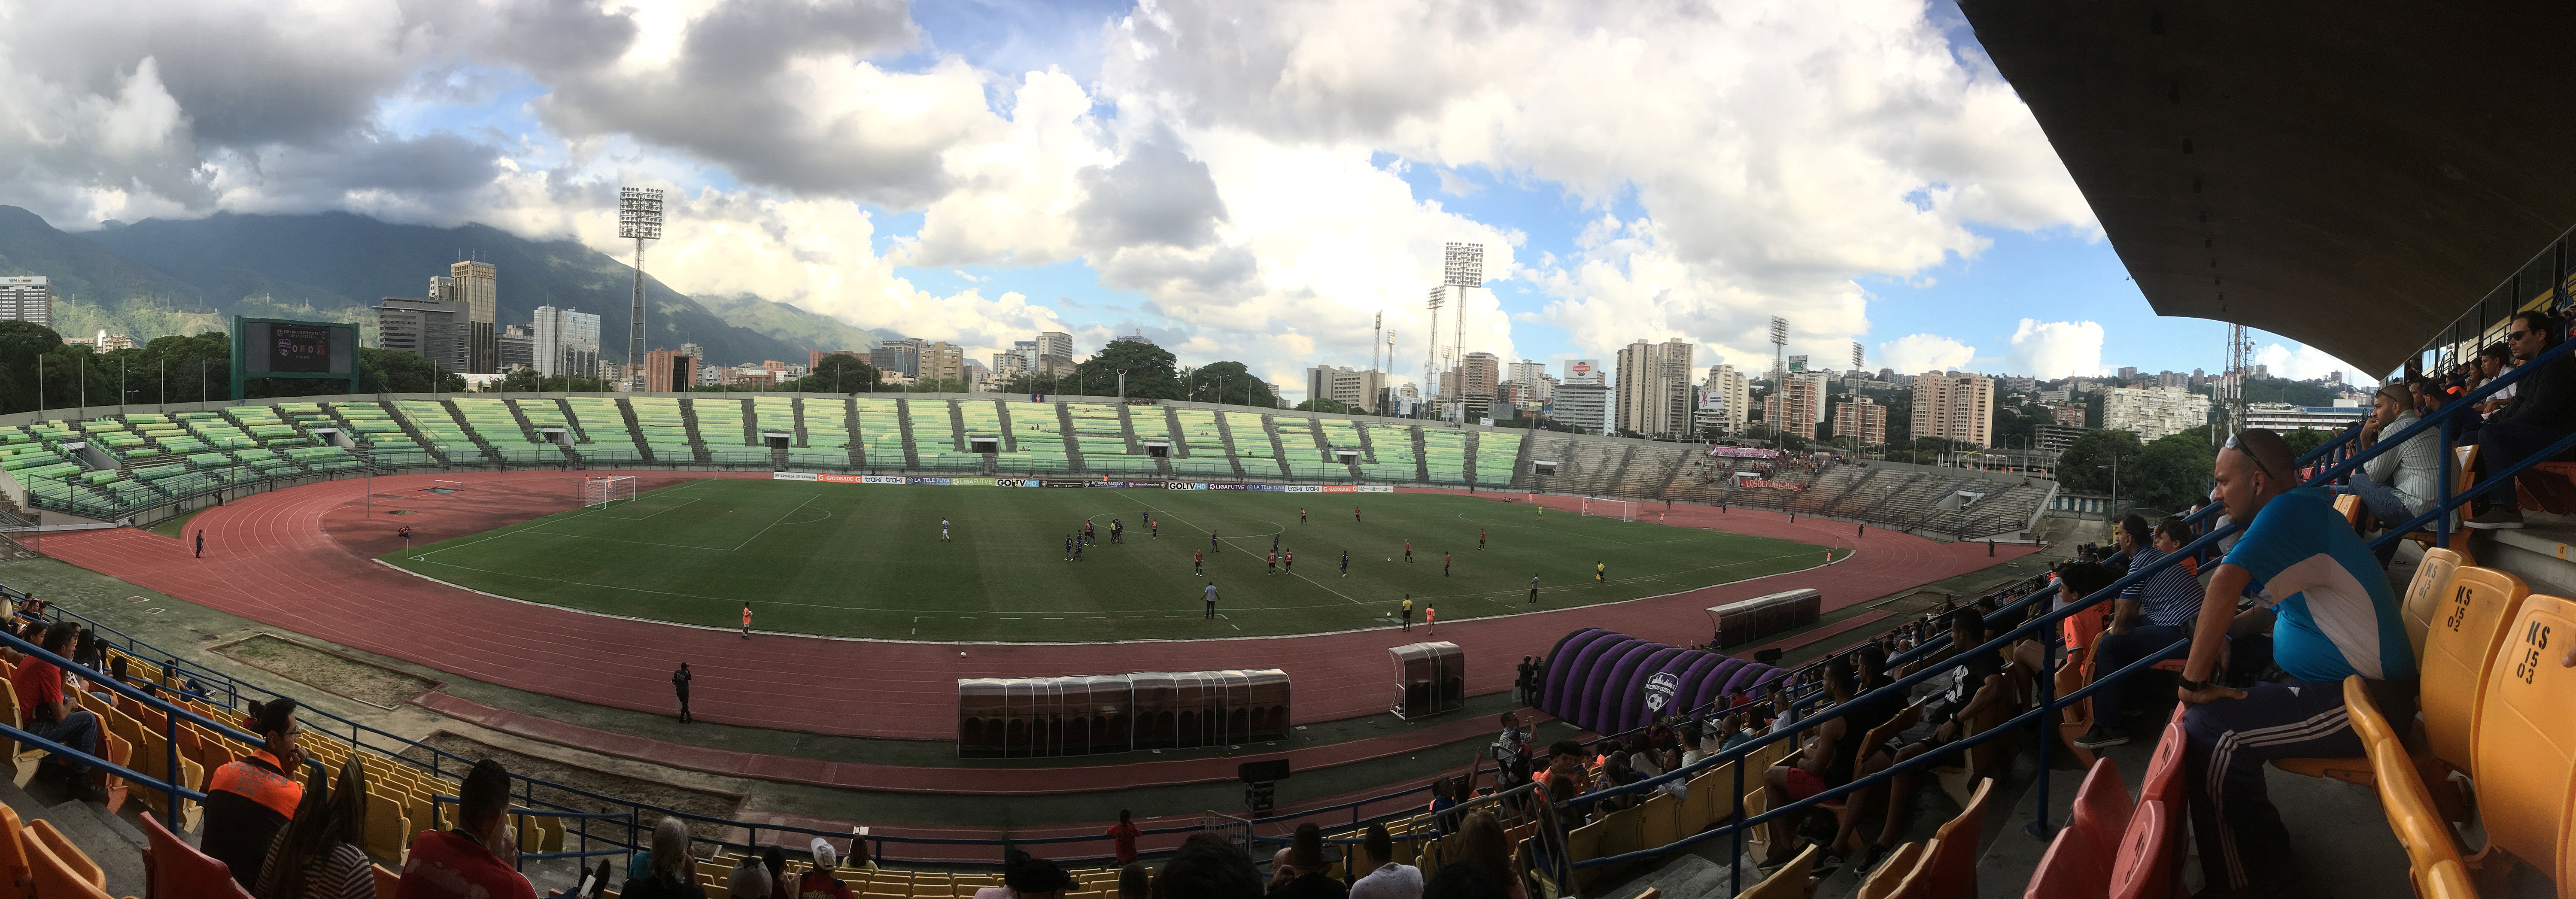 The Estadio Olimpico is seen in Caracas